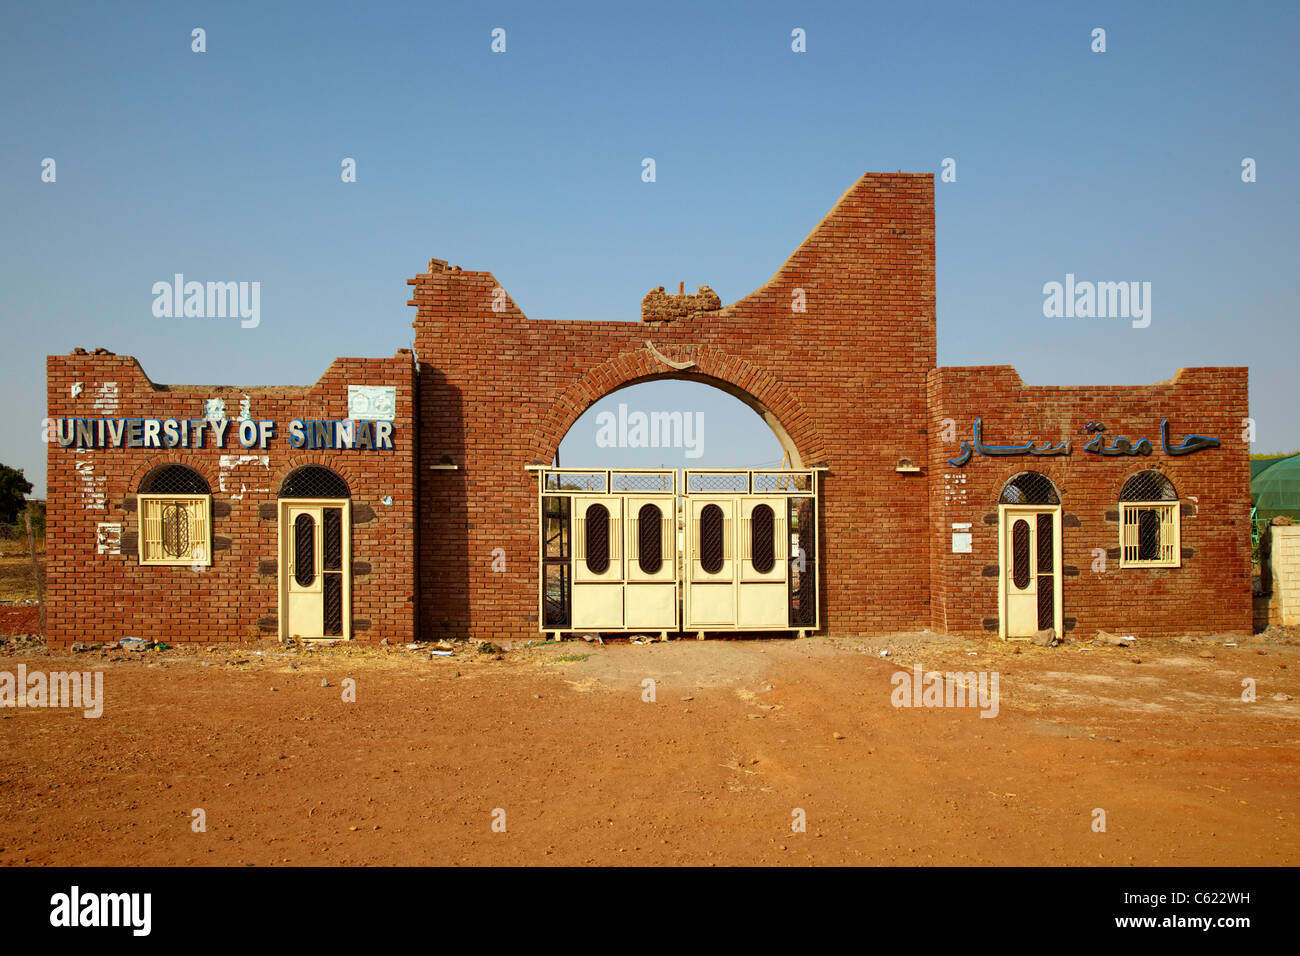 University of Sinnar, Sinnar, Sudan, Northern Africa Stock Photo